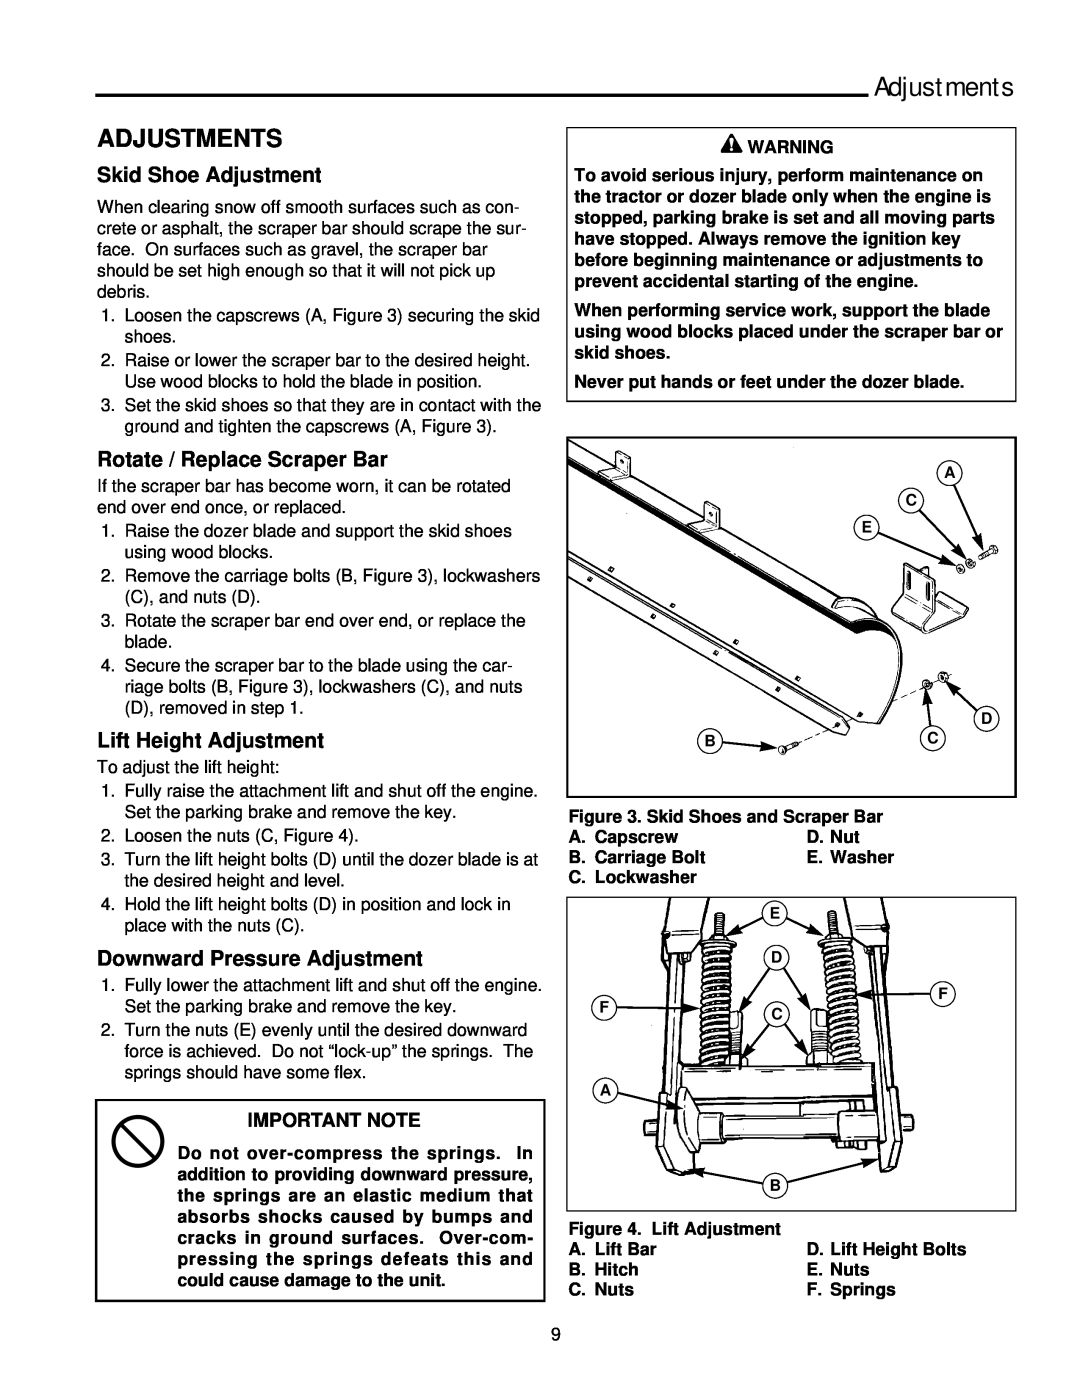 Snapper 2137 manual Adjustments, Skid Shoe Adjustment, Rotate / Replace Scraper Bar, Lift Height Adjustment, Important Note 